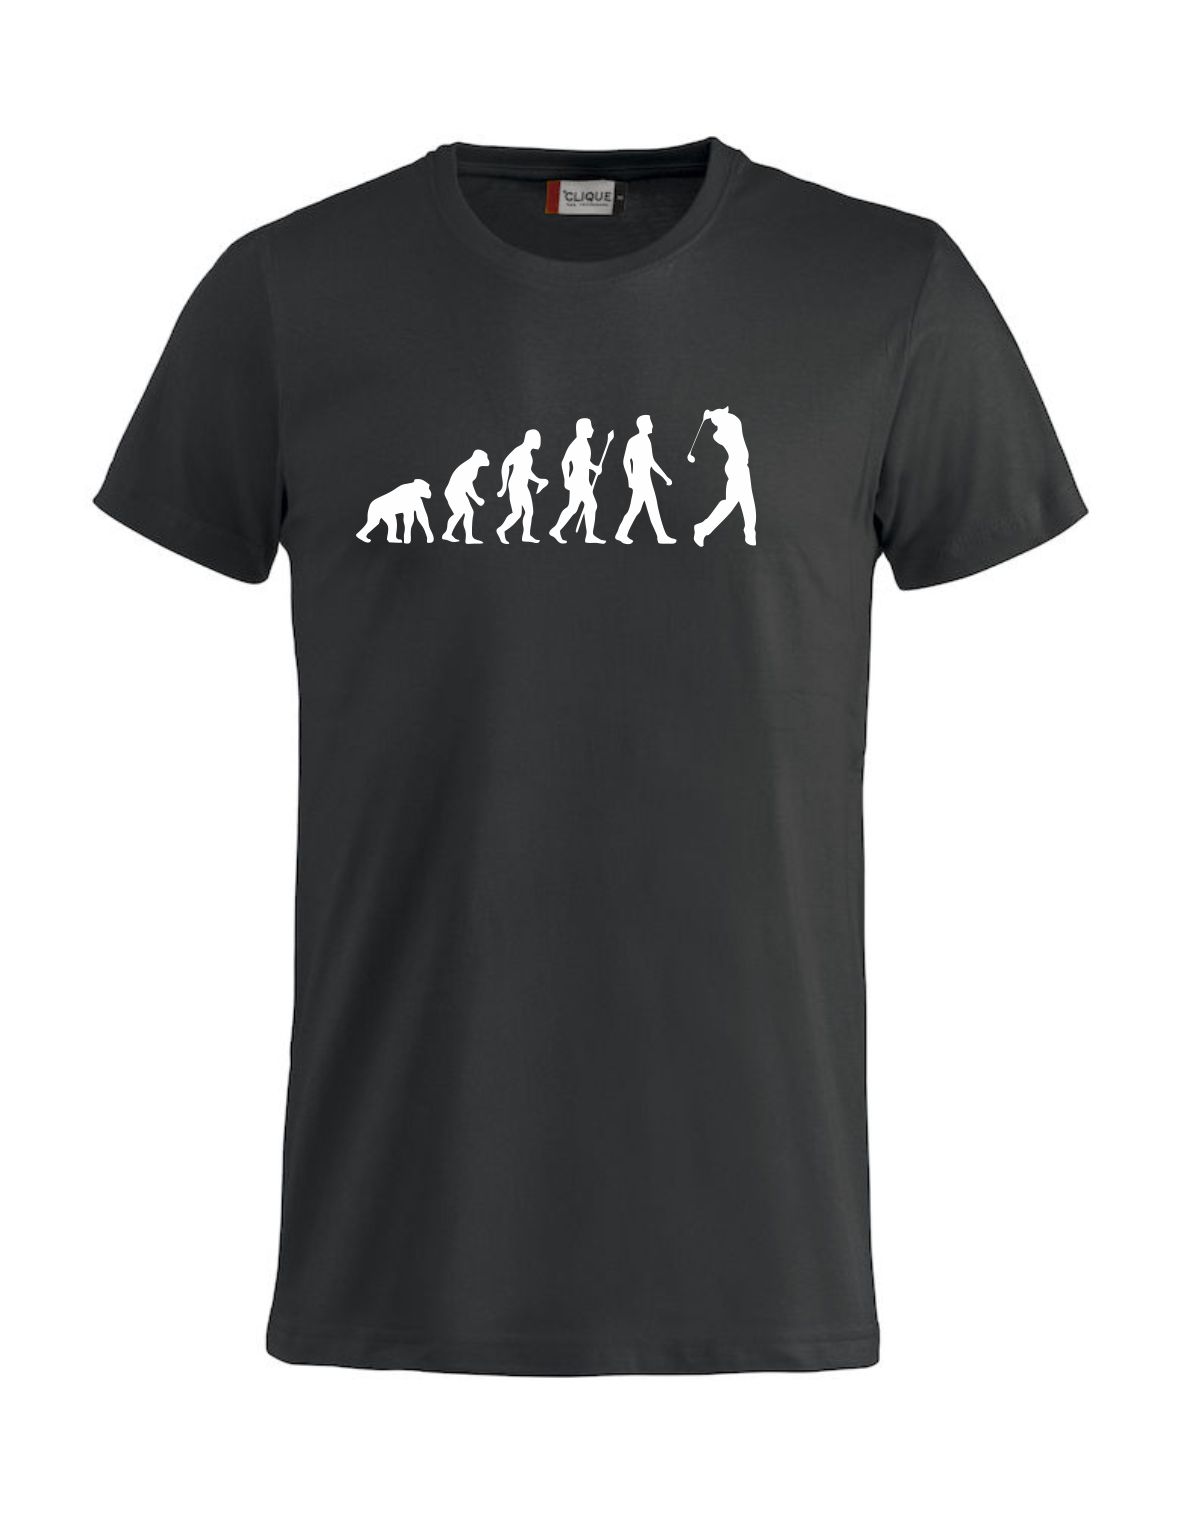 Golf Evolution T-Shirt